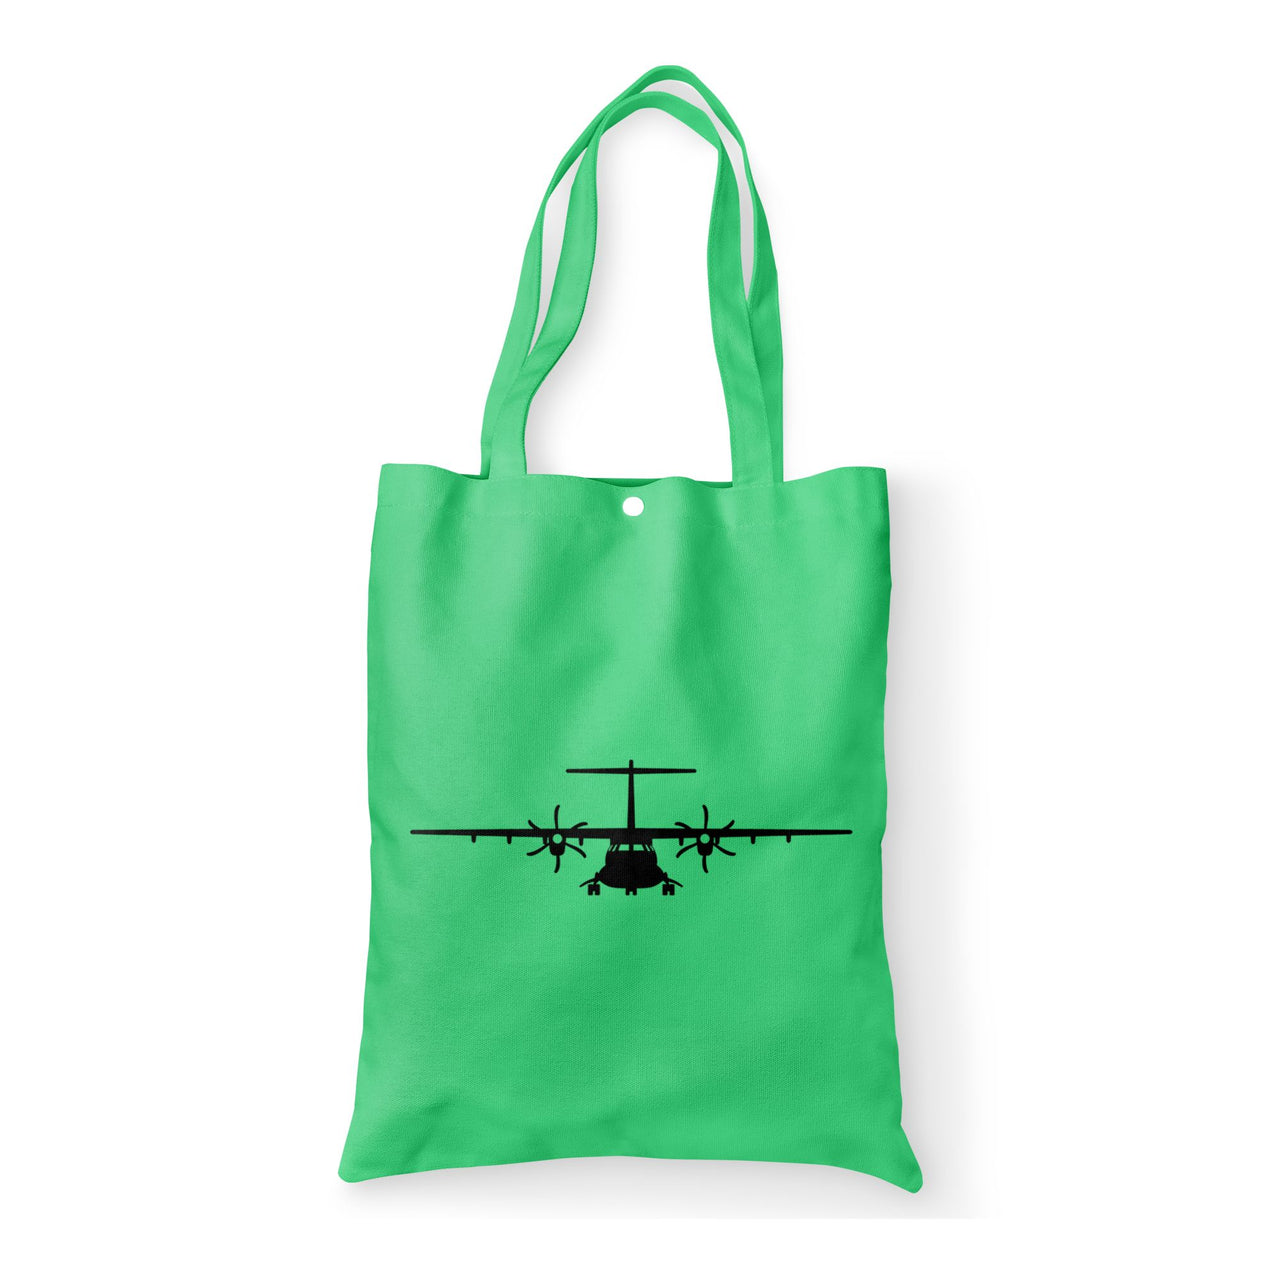 ATR-72 Silhouette Designed Tote Bags